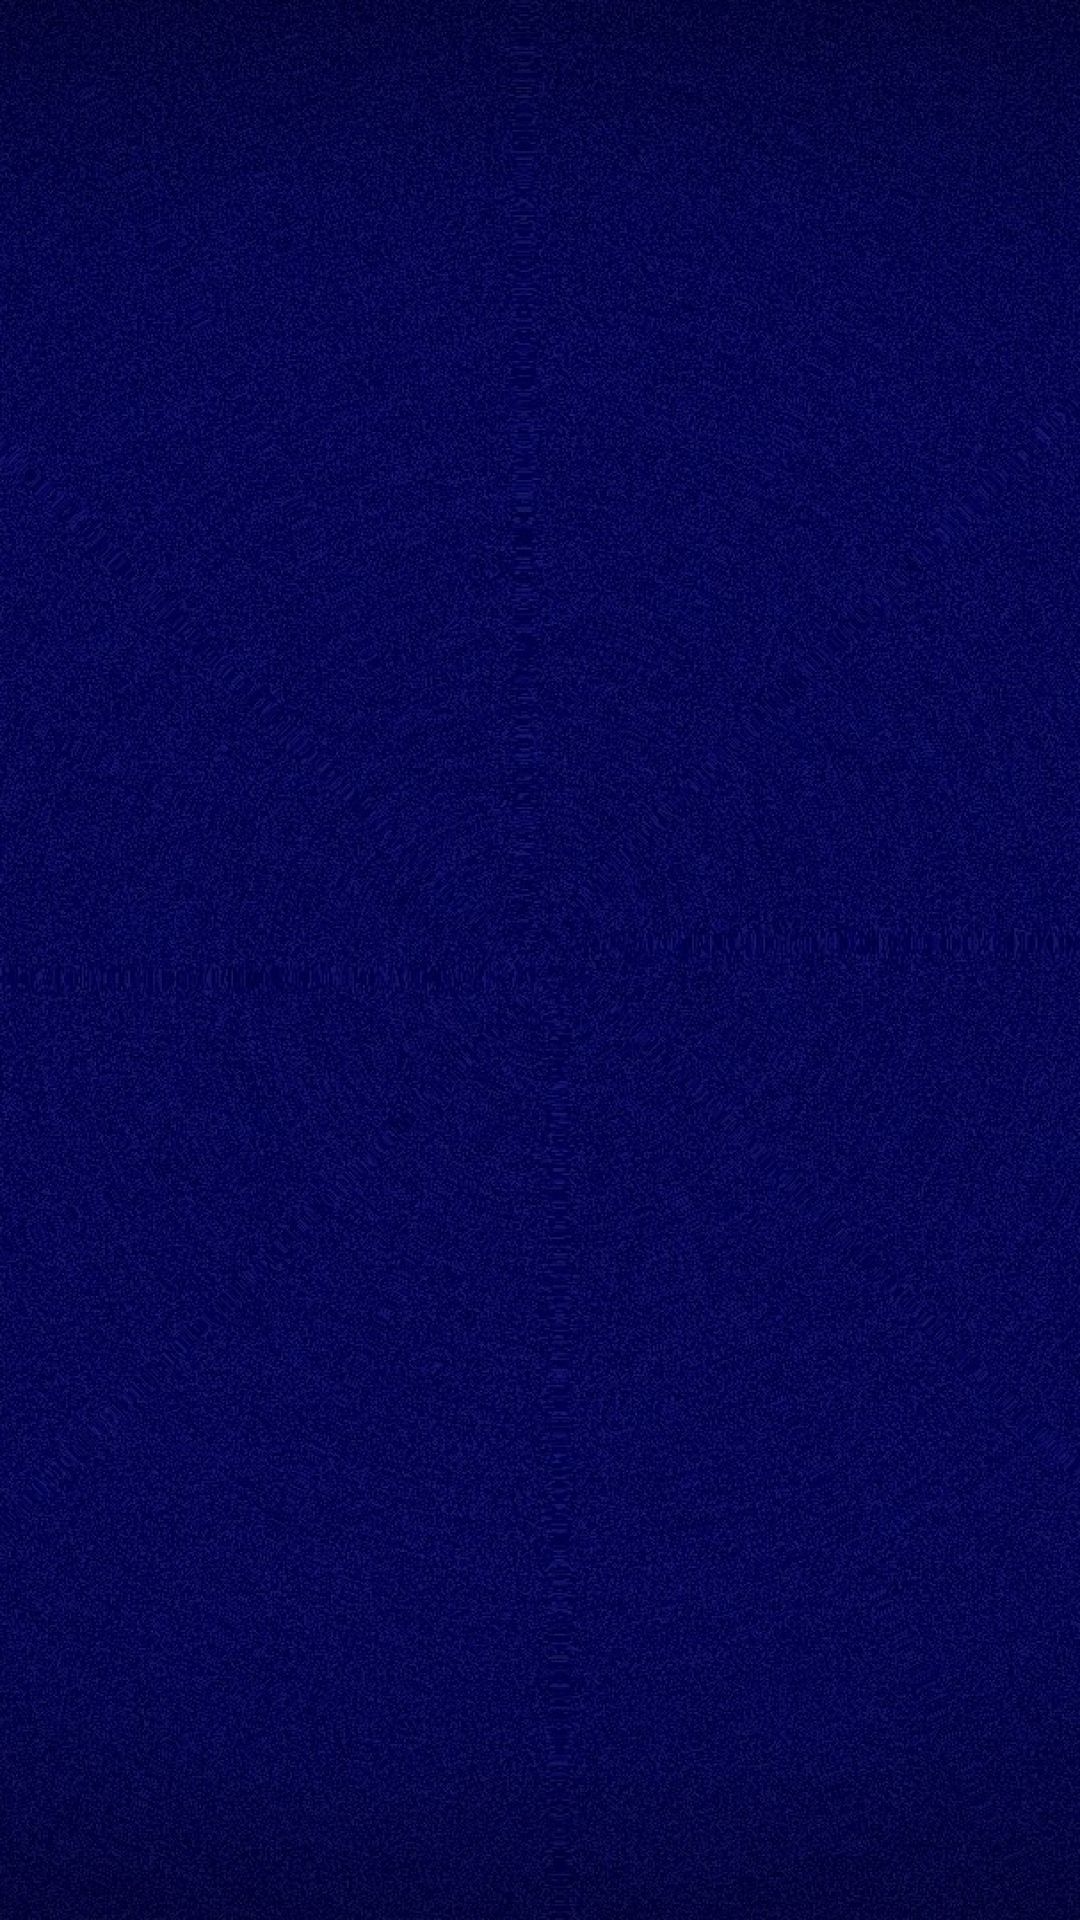 Navy blue geometrical patterned mobile wallpaper vector  free image by  rawpixelcom  ka  Blue background wallpapers Dark background wallpaper  Mobile wallpaper